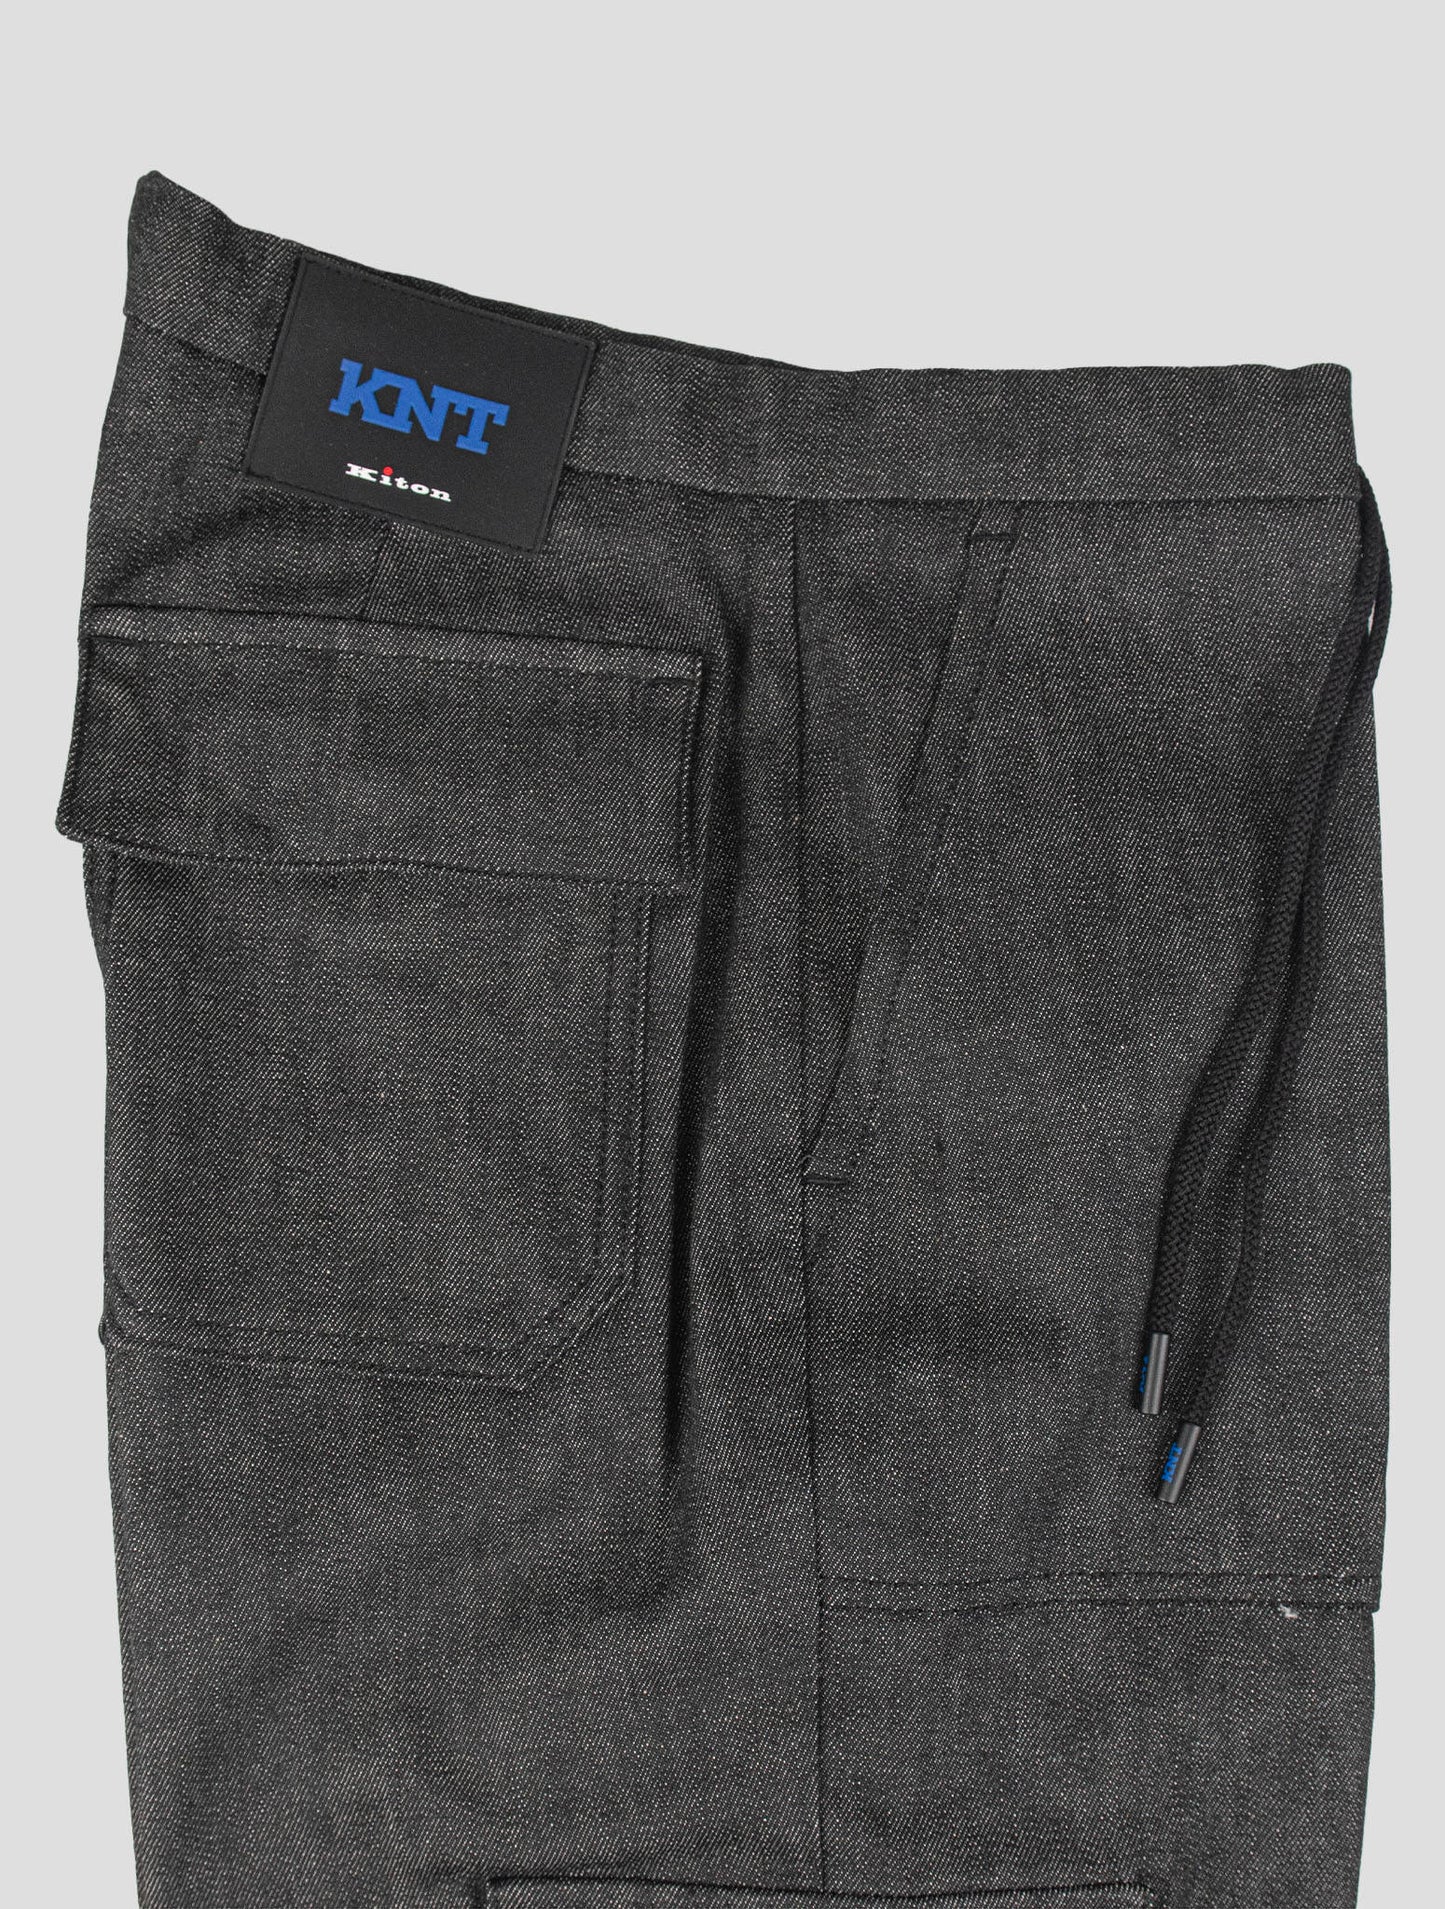 KNT Kiton Black Cotton Cashmere Ea Cargo Pants